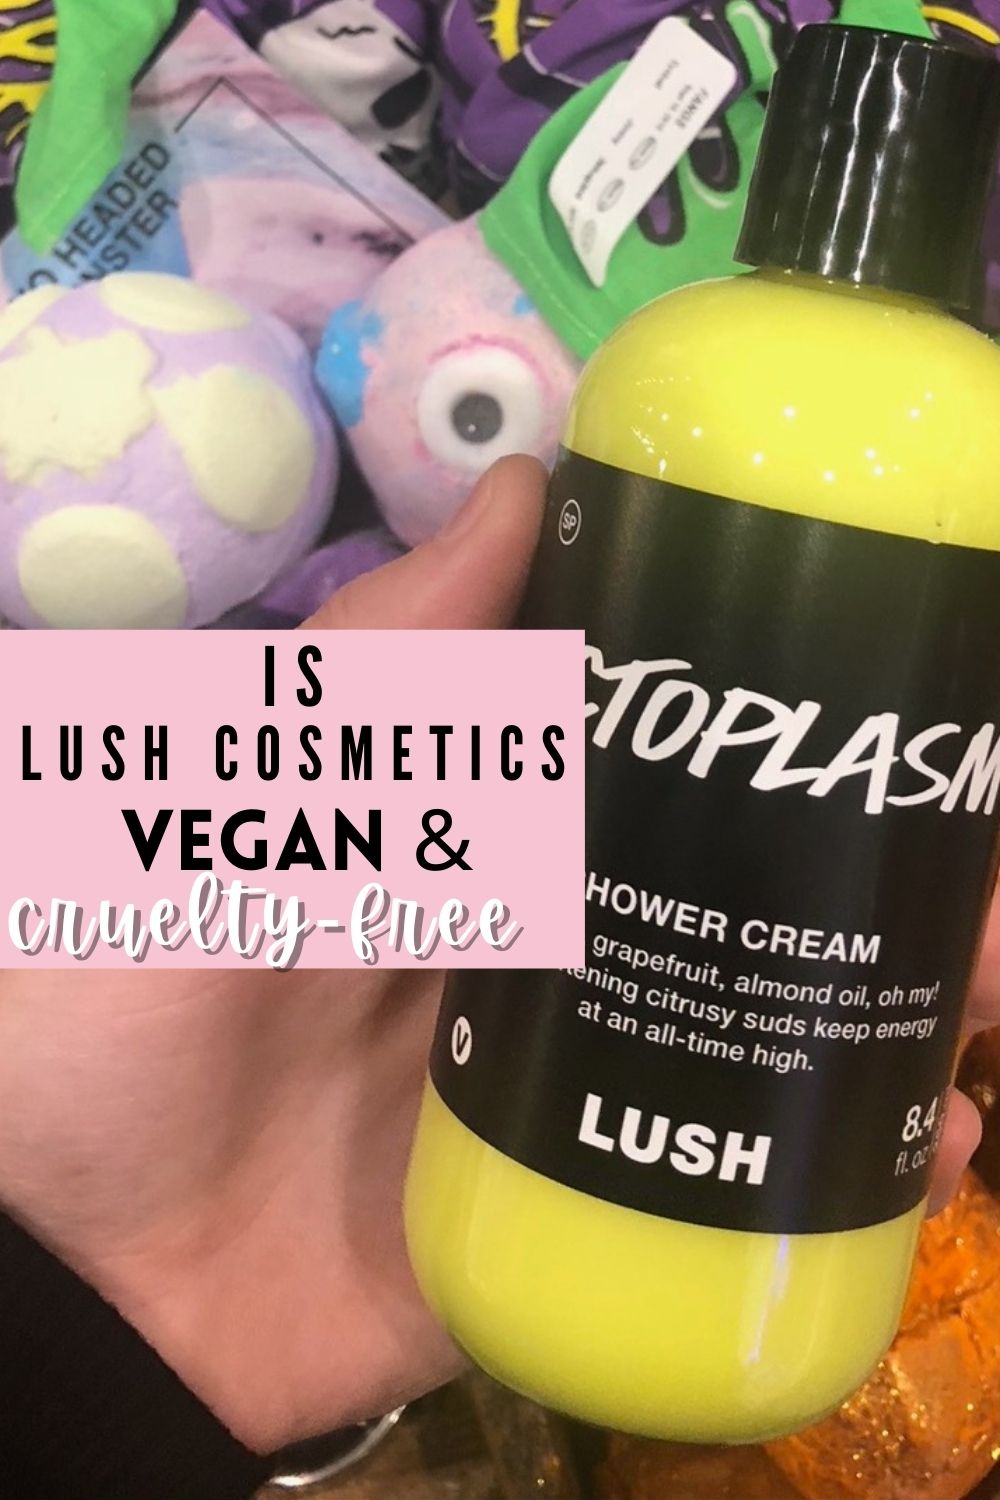 Smashbox Cosmetics Vegan List (Cruelty-Free)